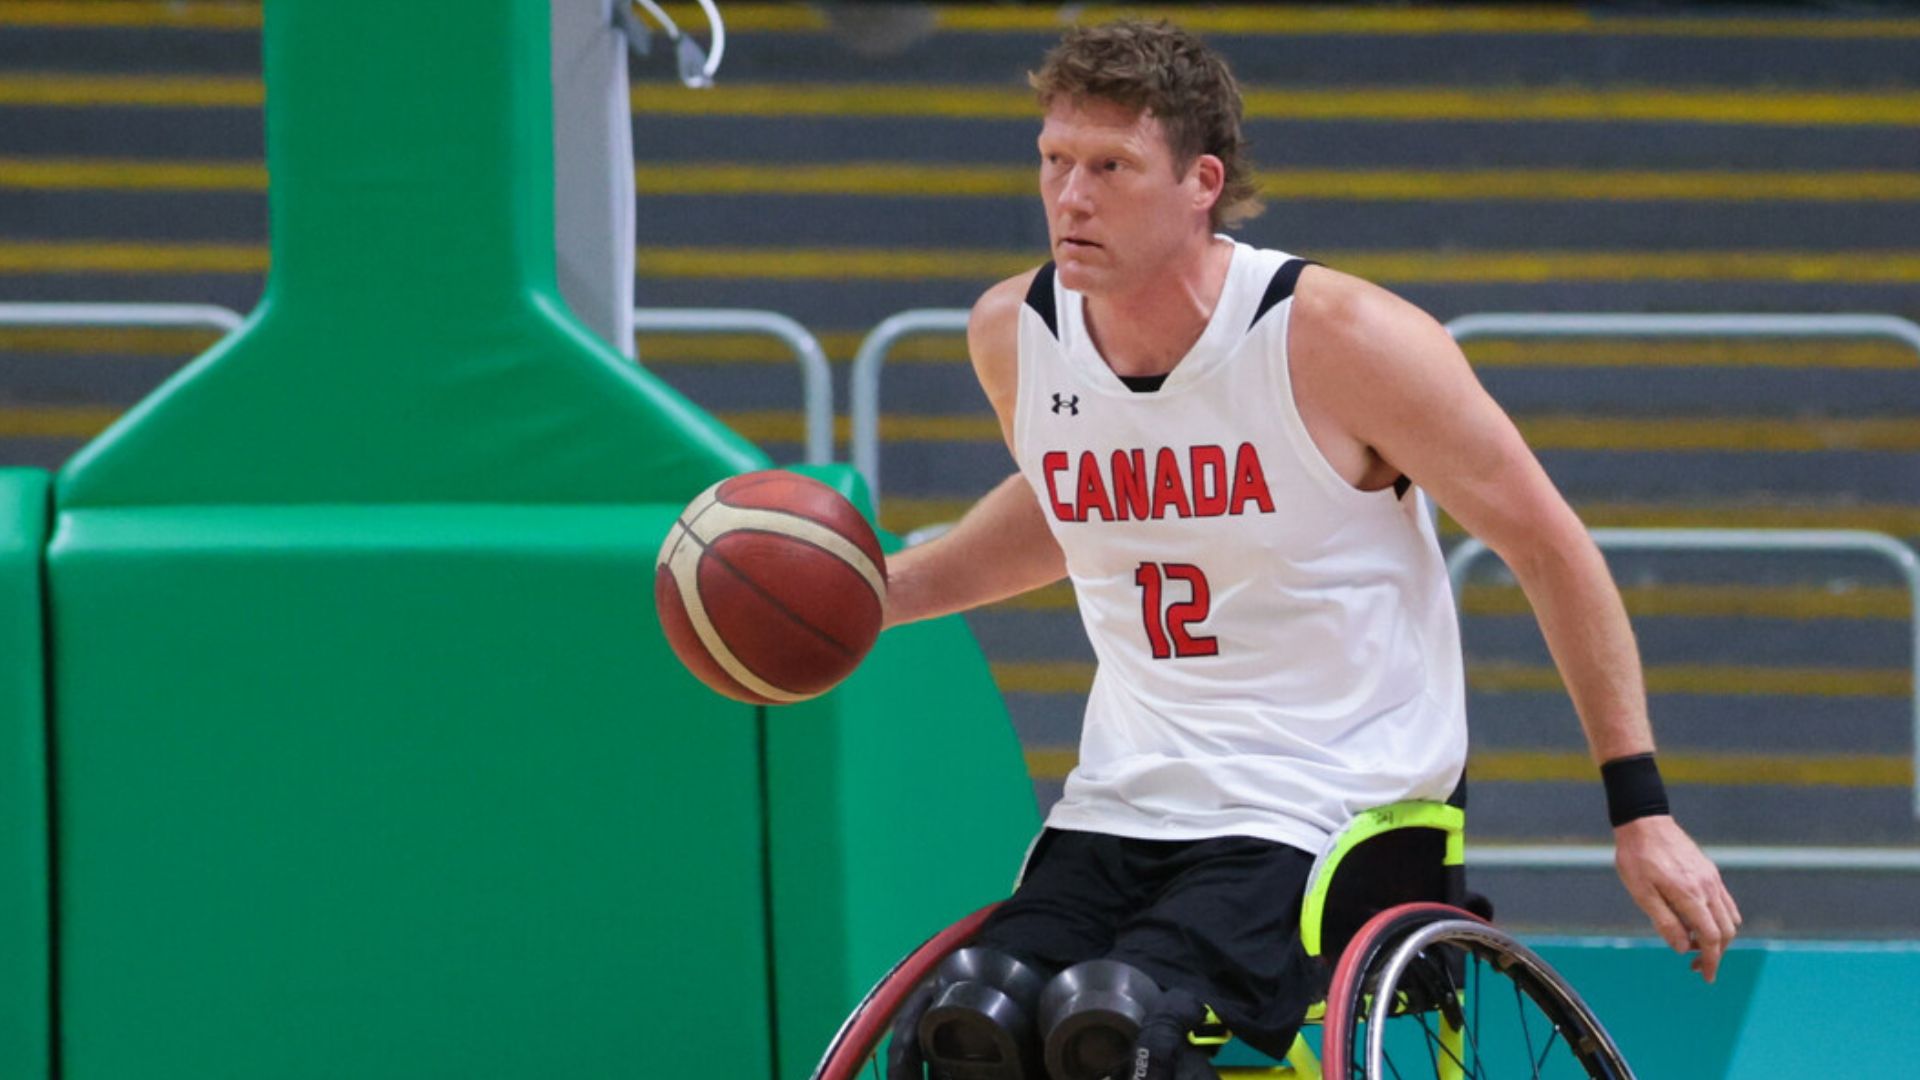 Wheelchair Basketball: Canada Confirms Their Favoritism Against Puerto Rico